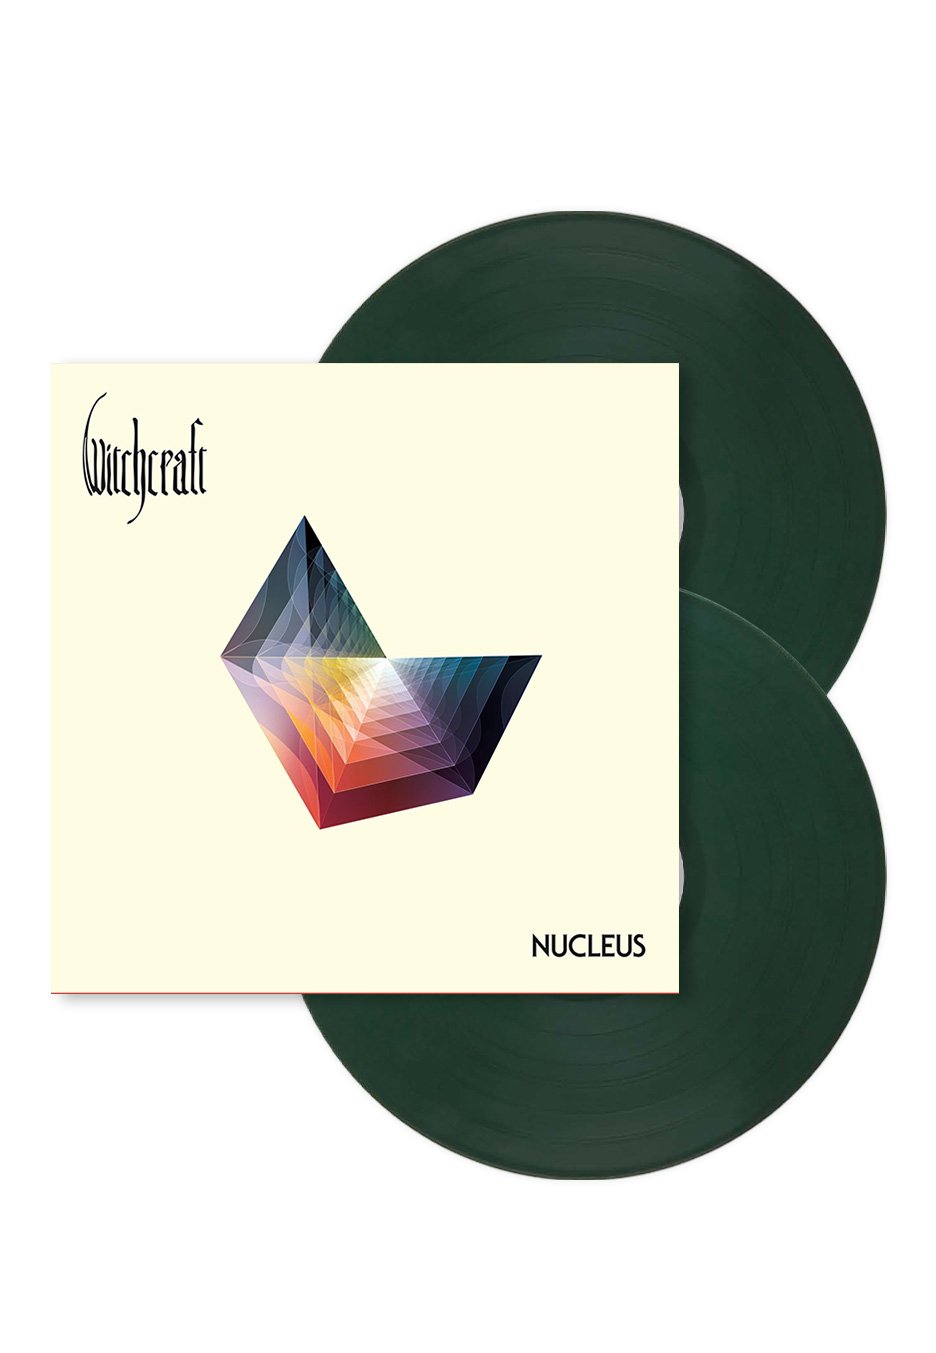 Witchcraft - Nucleus (Reissue) Ltd. Green - Colored 2 Vinyl